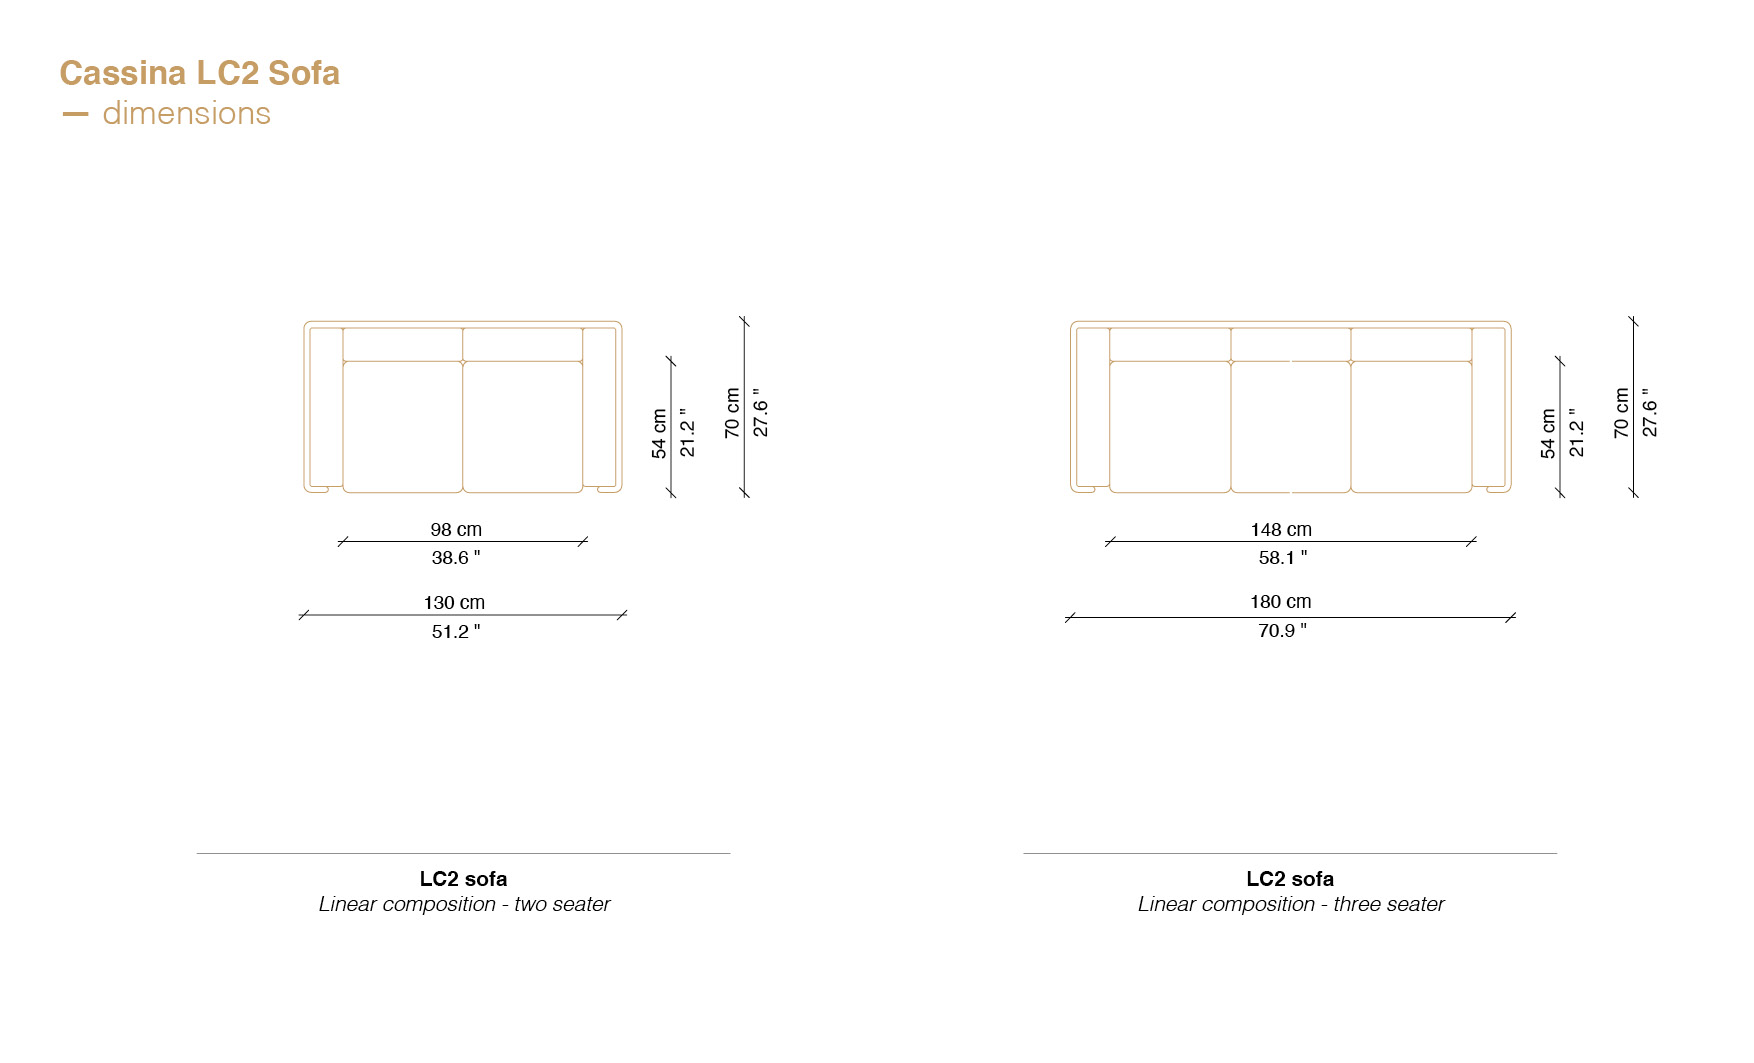 LC2 sofa dimensions and Cassina sofa price